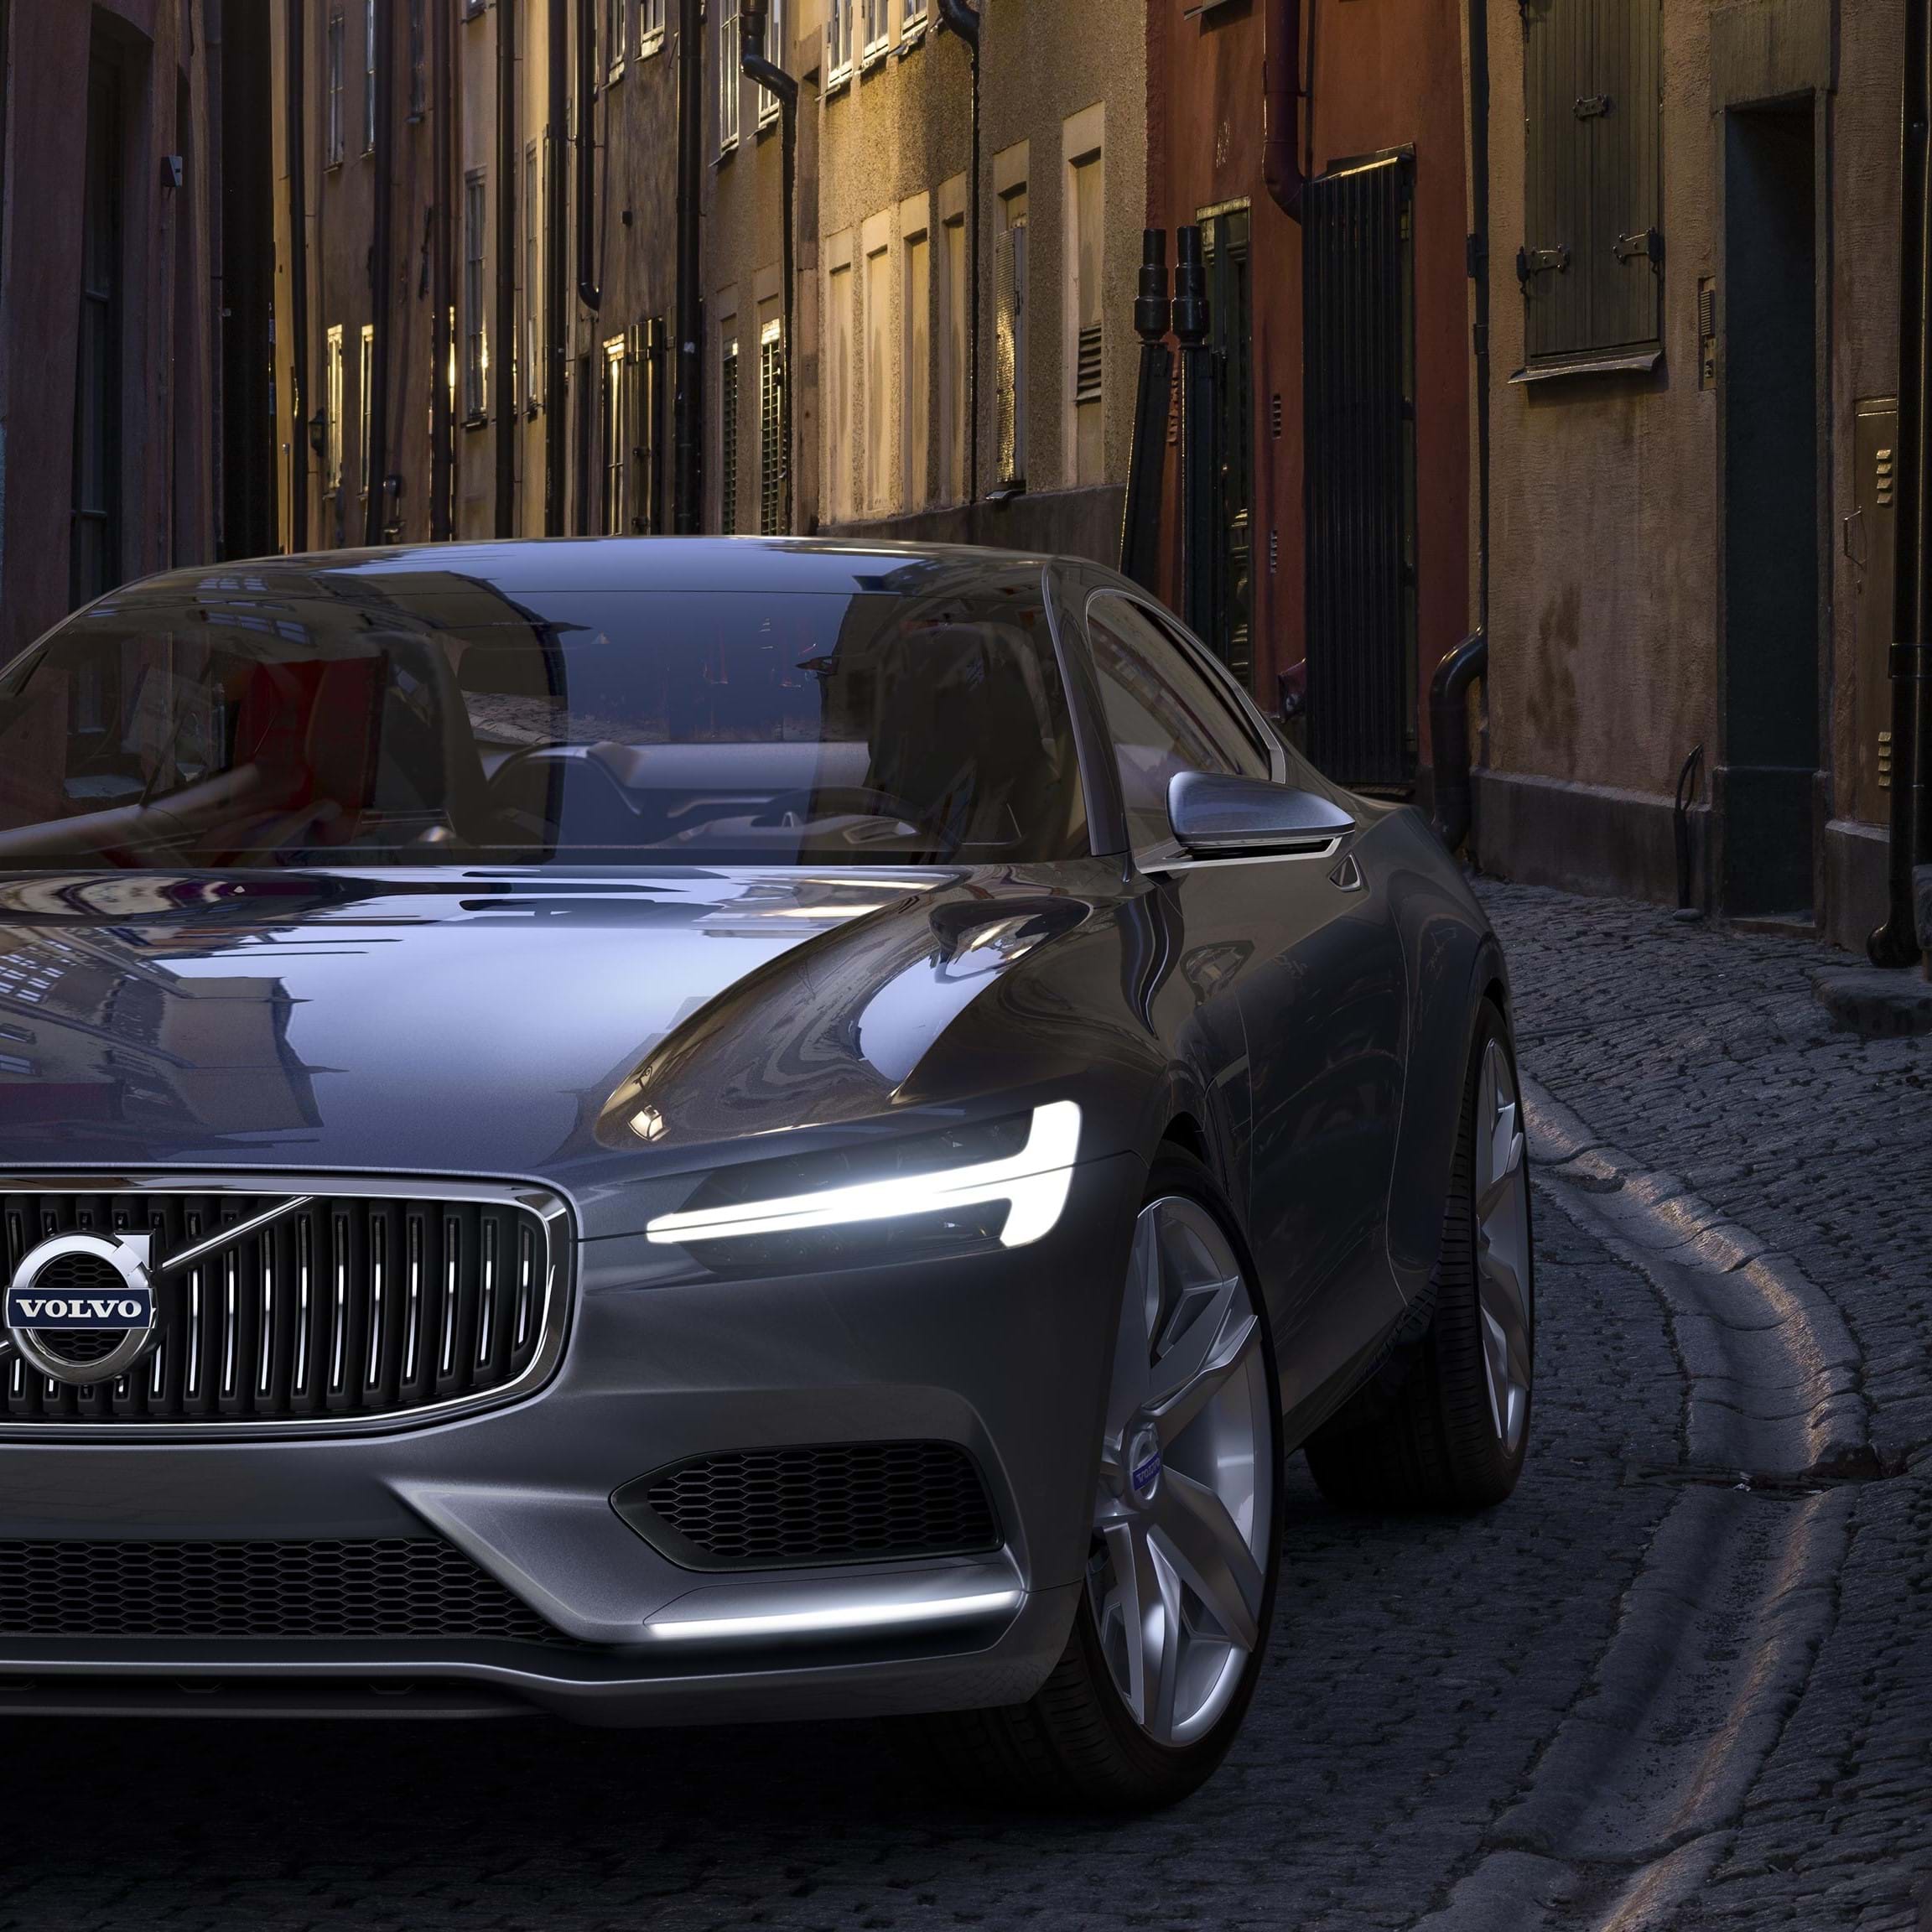 Volvo Concept Coupe движется по городской улице